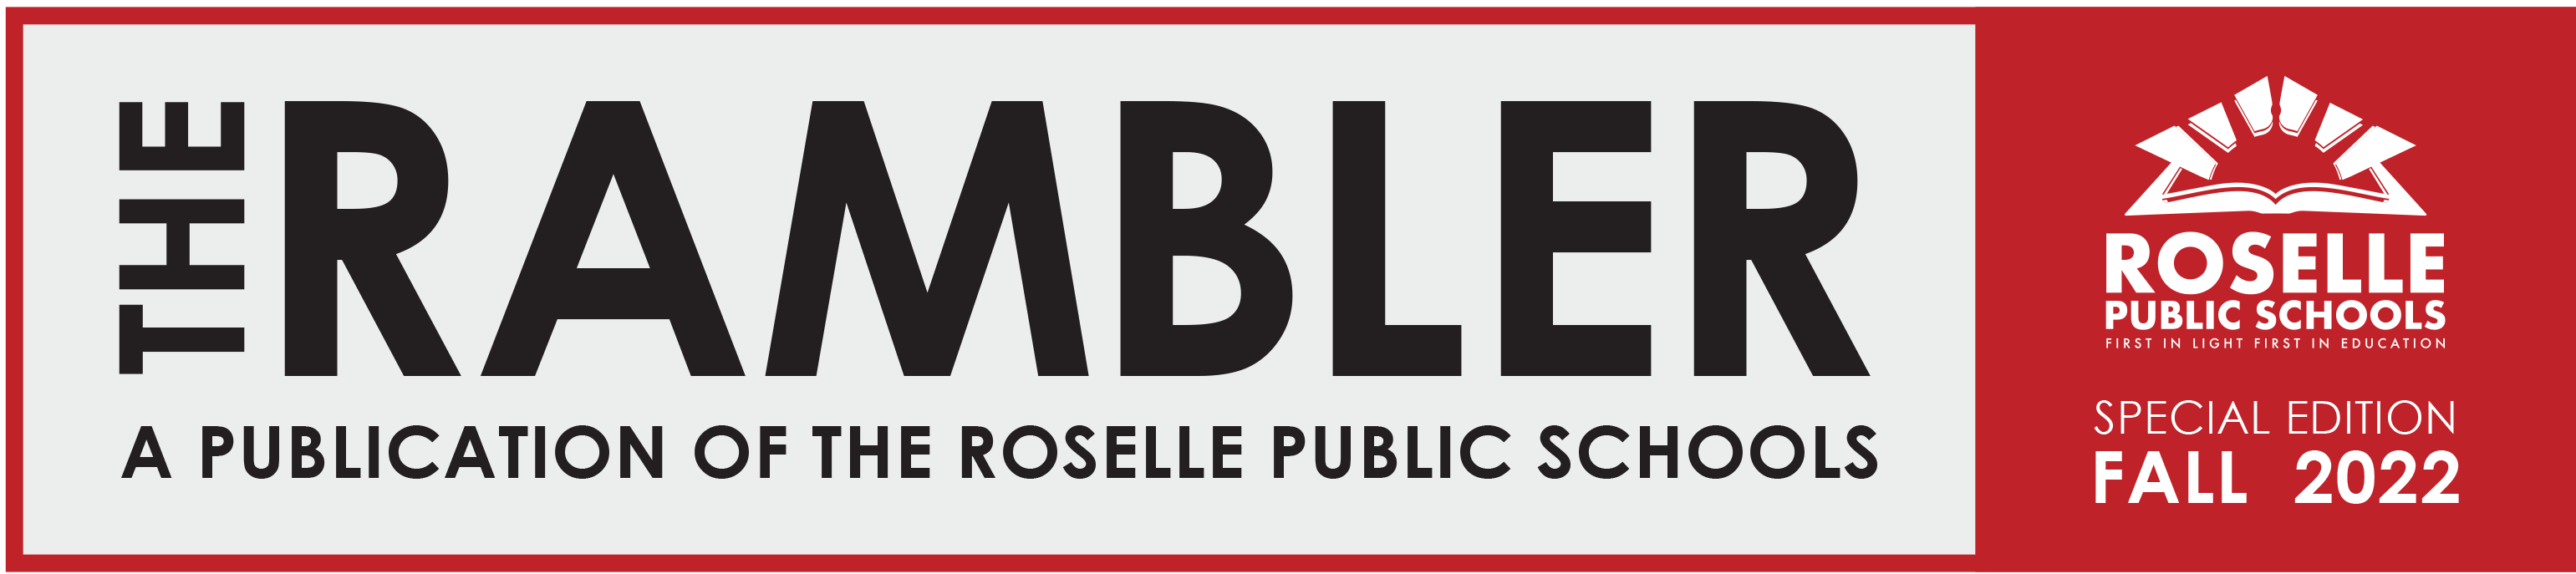 Roselle Bulletin Special Edition Fall 2022 v7-1